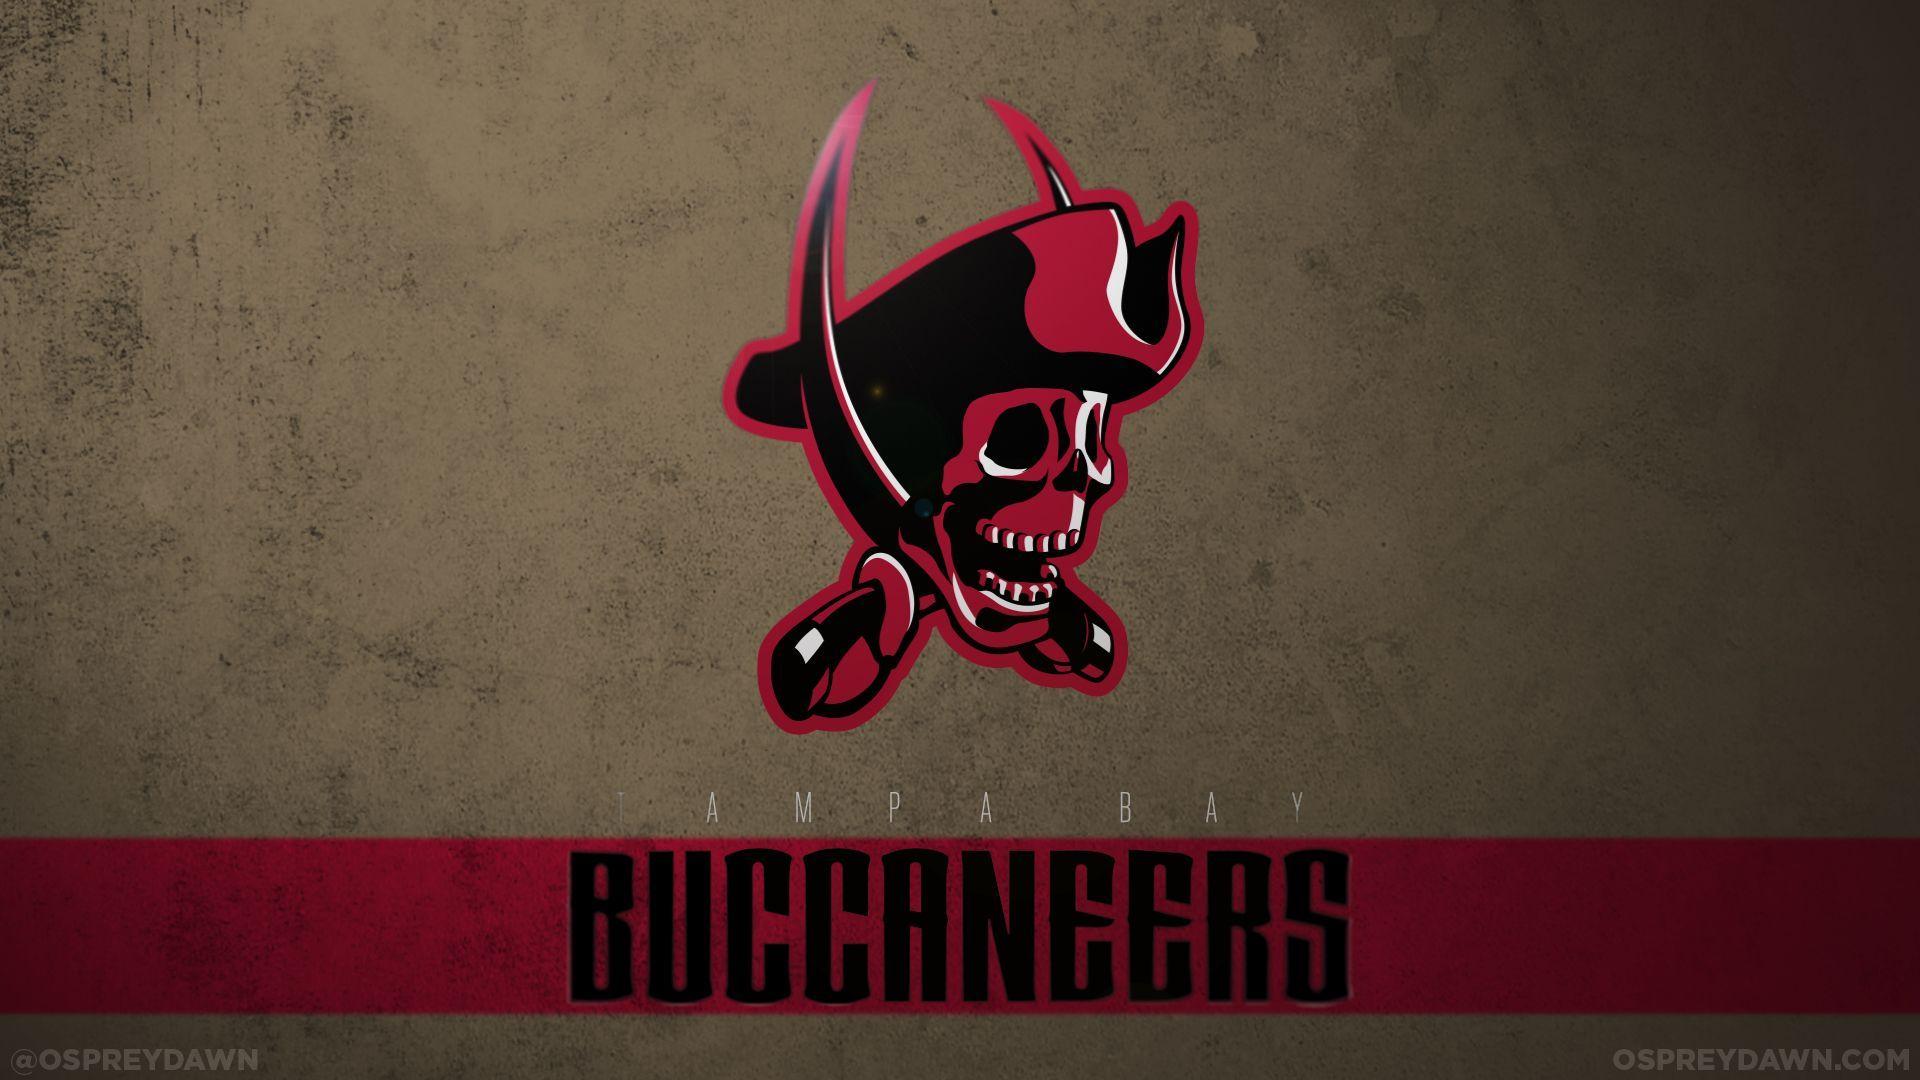 NFL Buccaneers Logo - Tampa Bay Buccaneers Wallpaper PC iPhone Android. HD Wallpaper